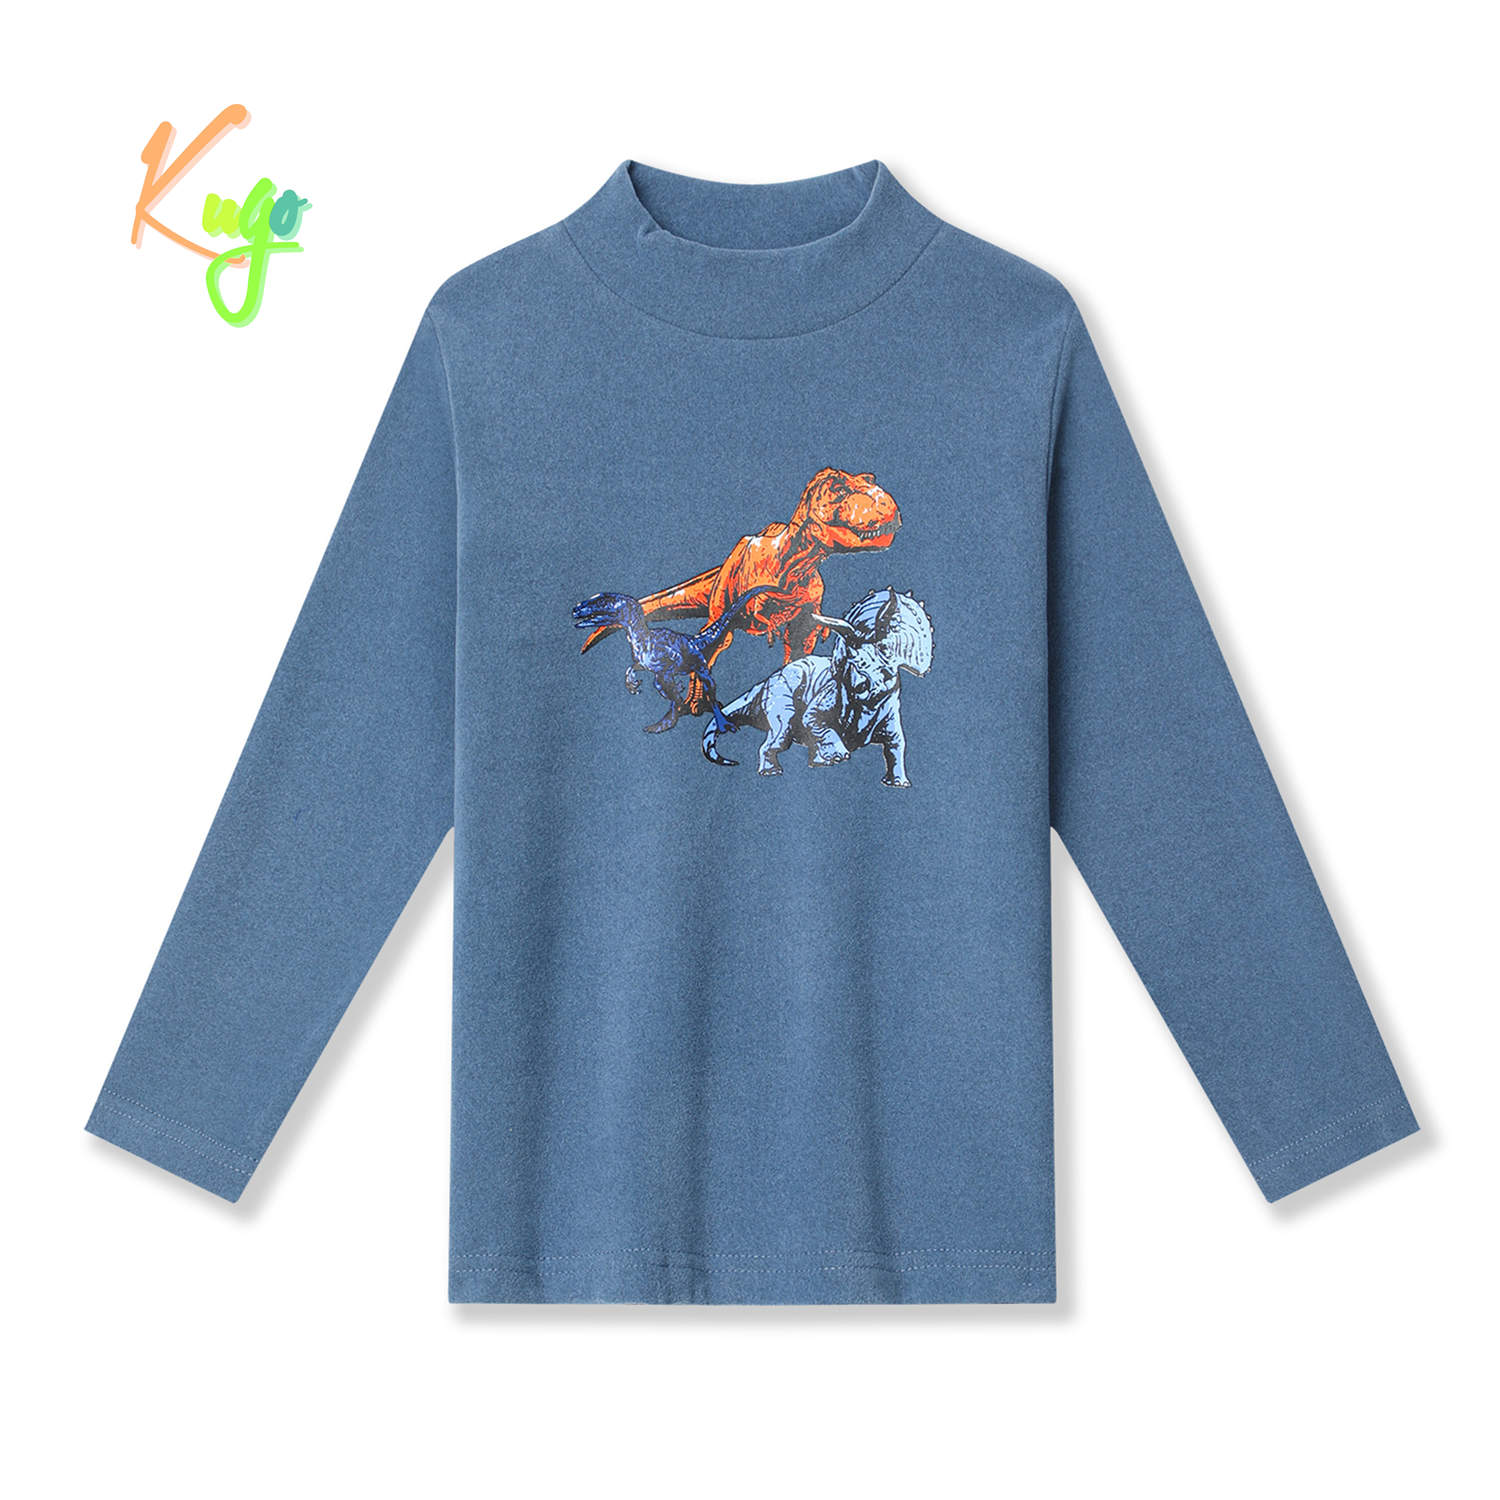 Chlapecké tričko - KUGO KC2327, šedomodrá Barva: Modrá, Velikost: 98